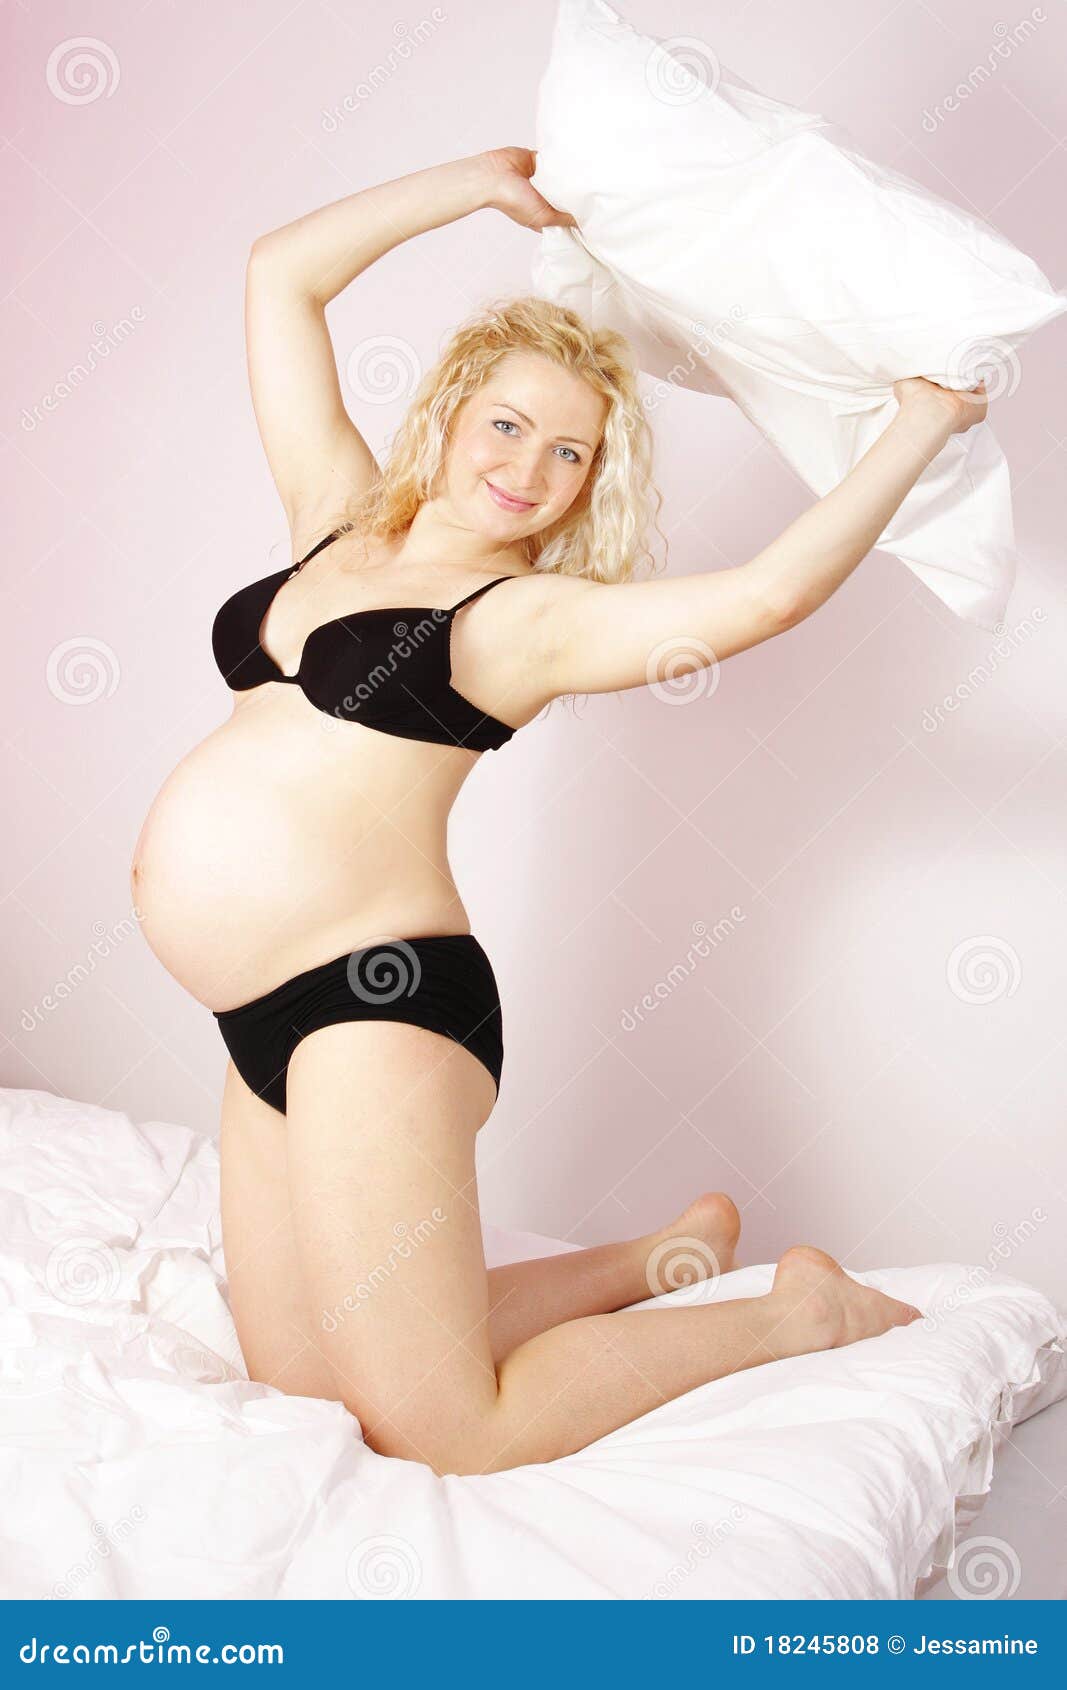 A Large Black Bra Lying on the Bed Stock Photo - Image of bikini,  underwear: 124401430